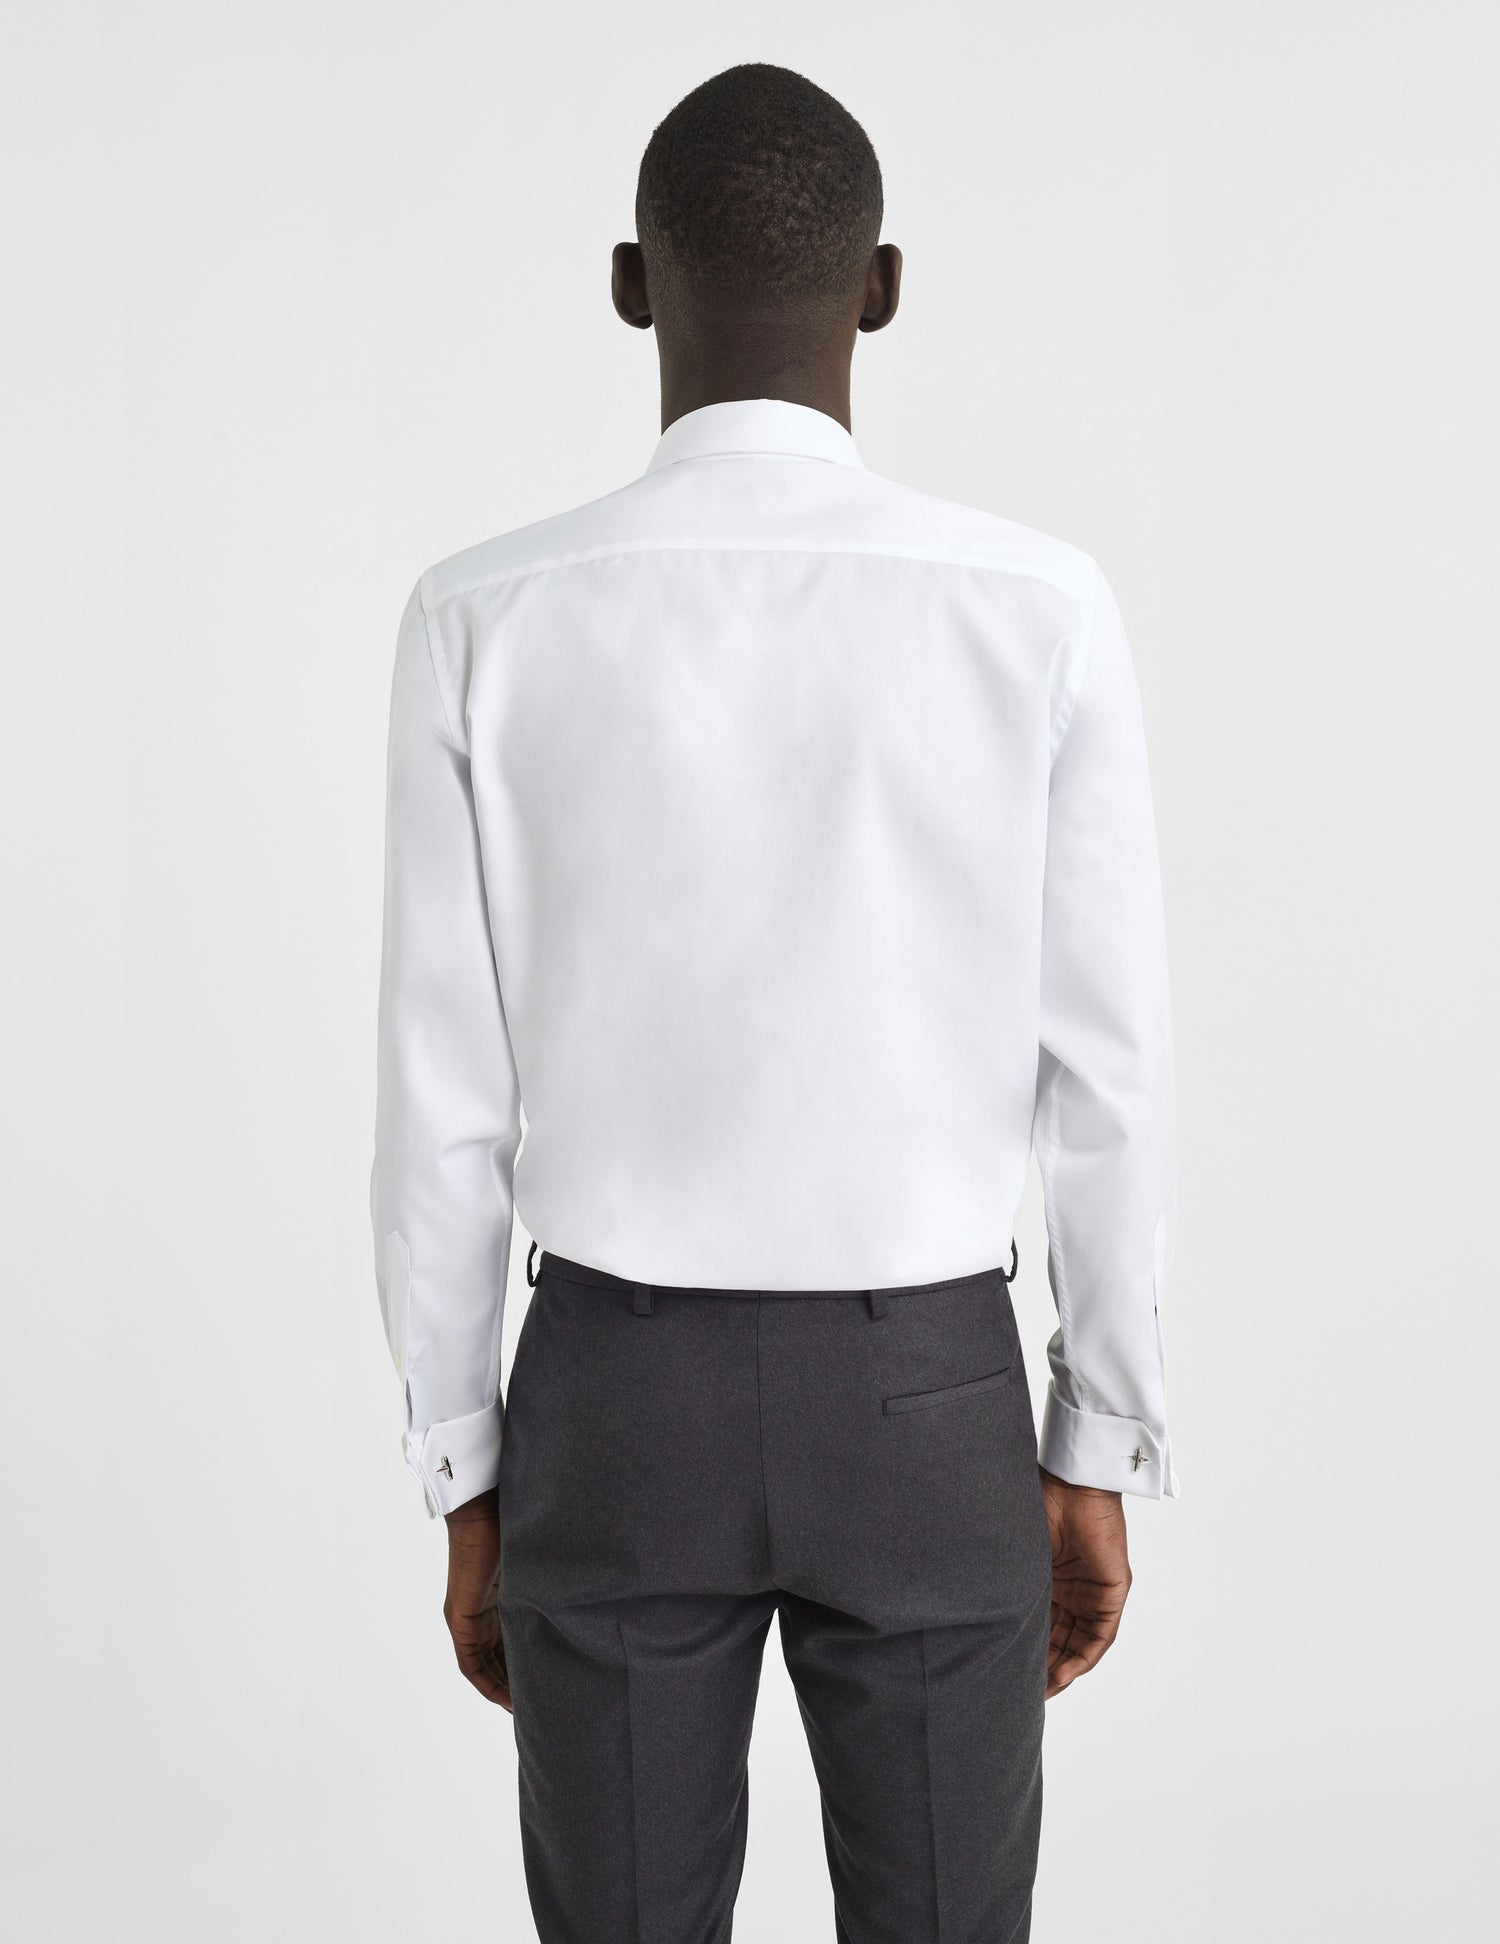 Semi-fitted white shirt - Twill - Italian Collar - French Cuffs#4